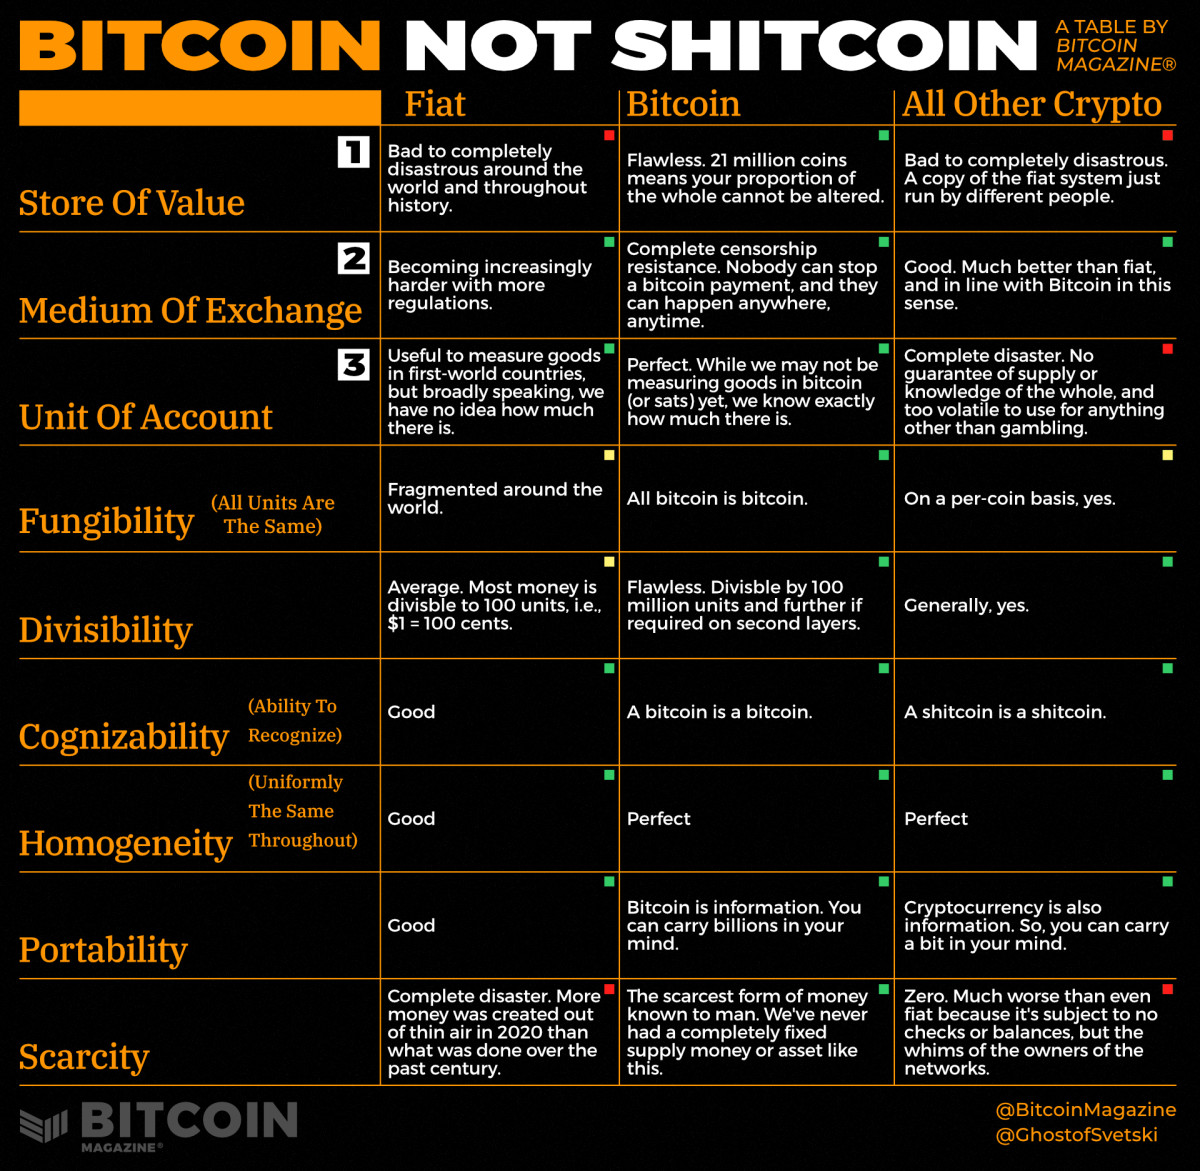 BitcoinMagazine®-bitcoin-not-shitcoin-table